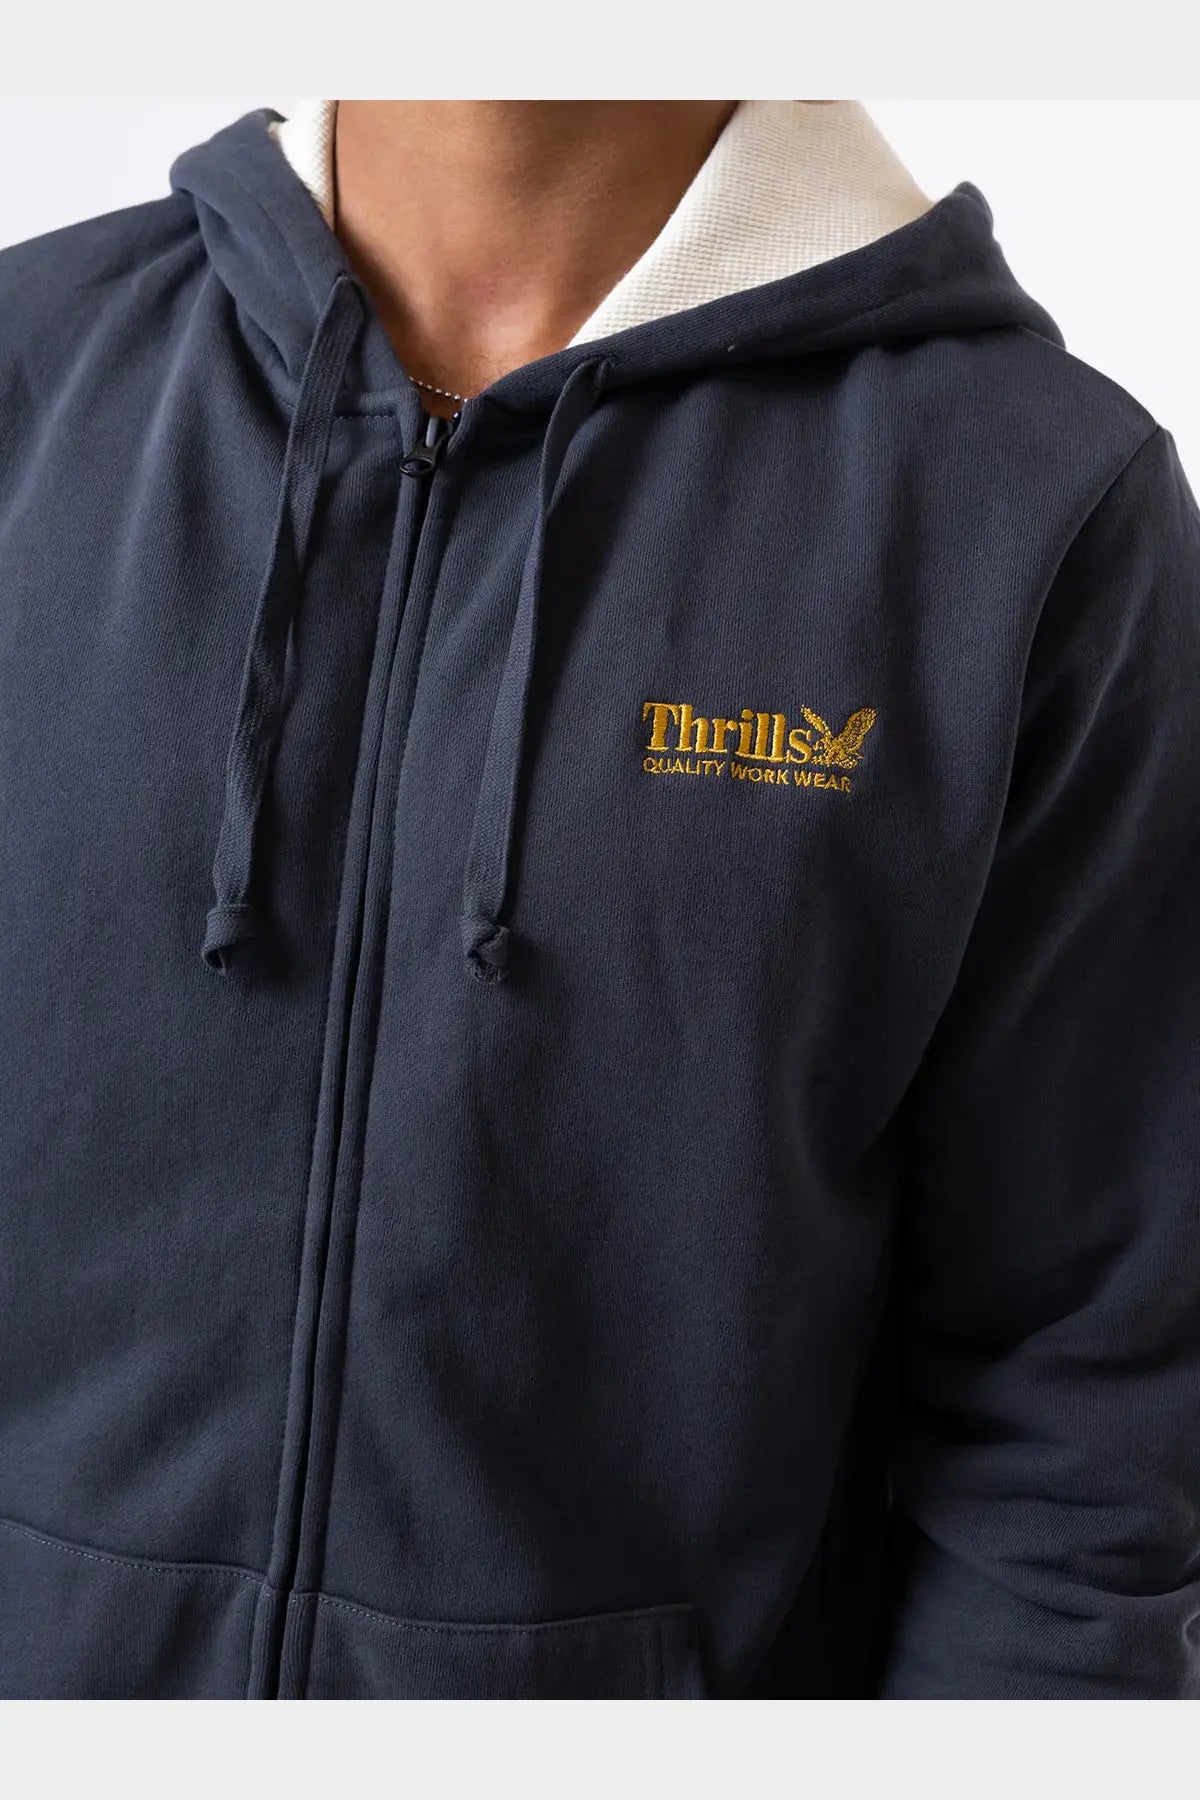 THRILLS Union zip hood - Dark charcoal